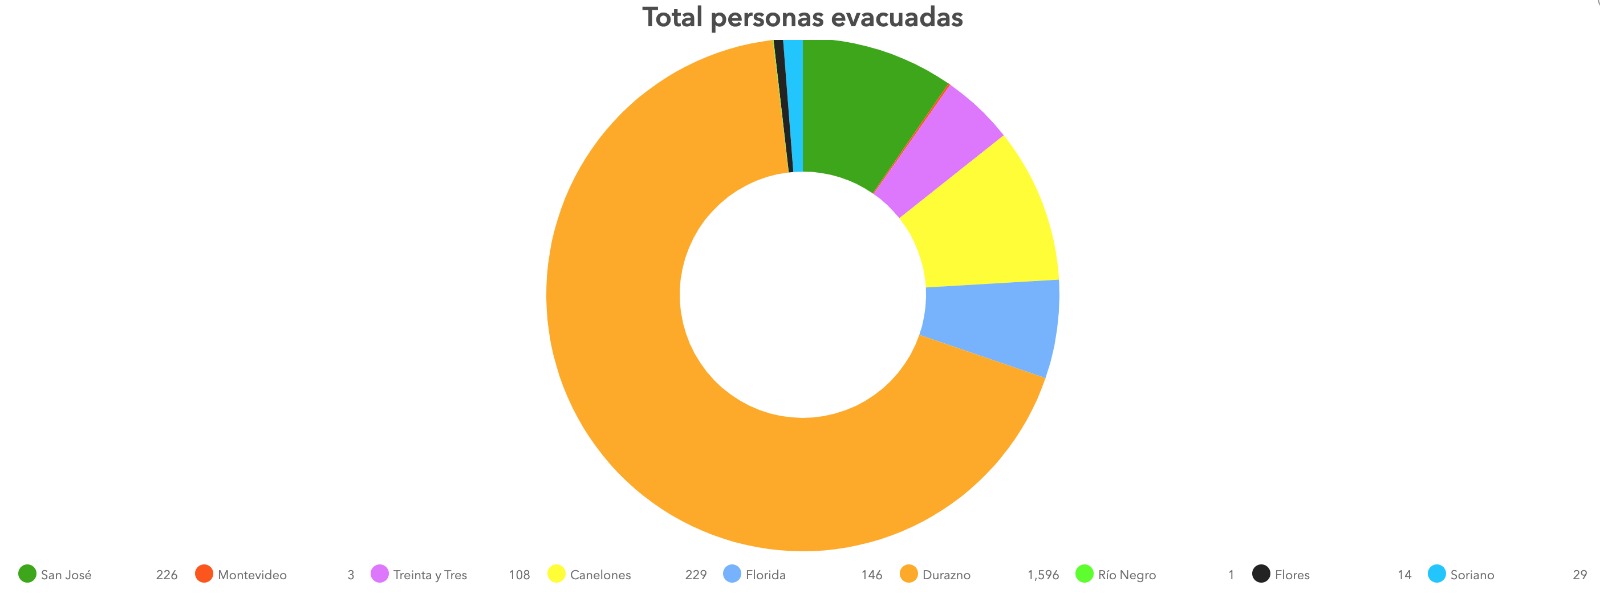 Total personas evacuadas